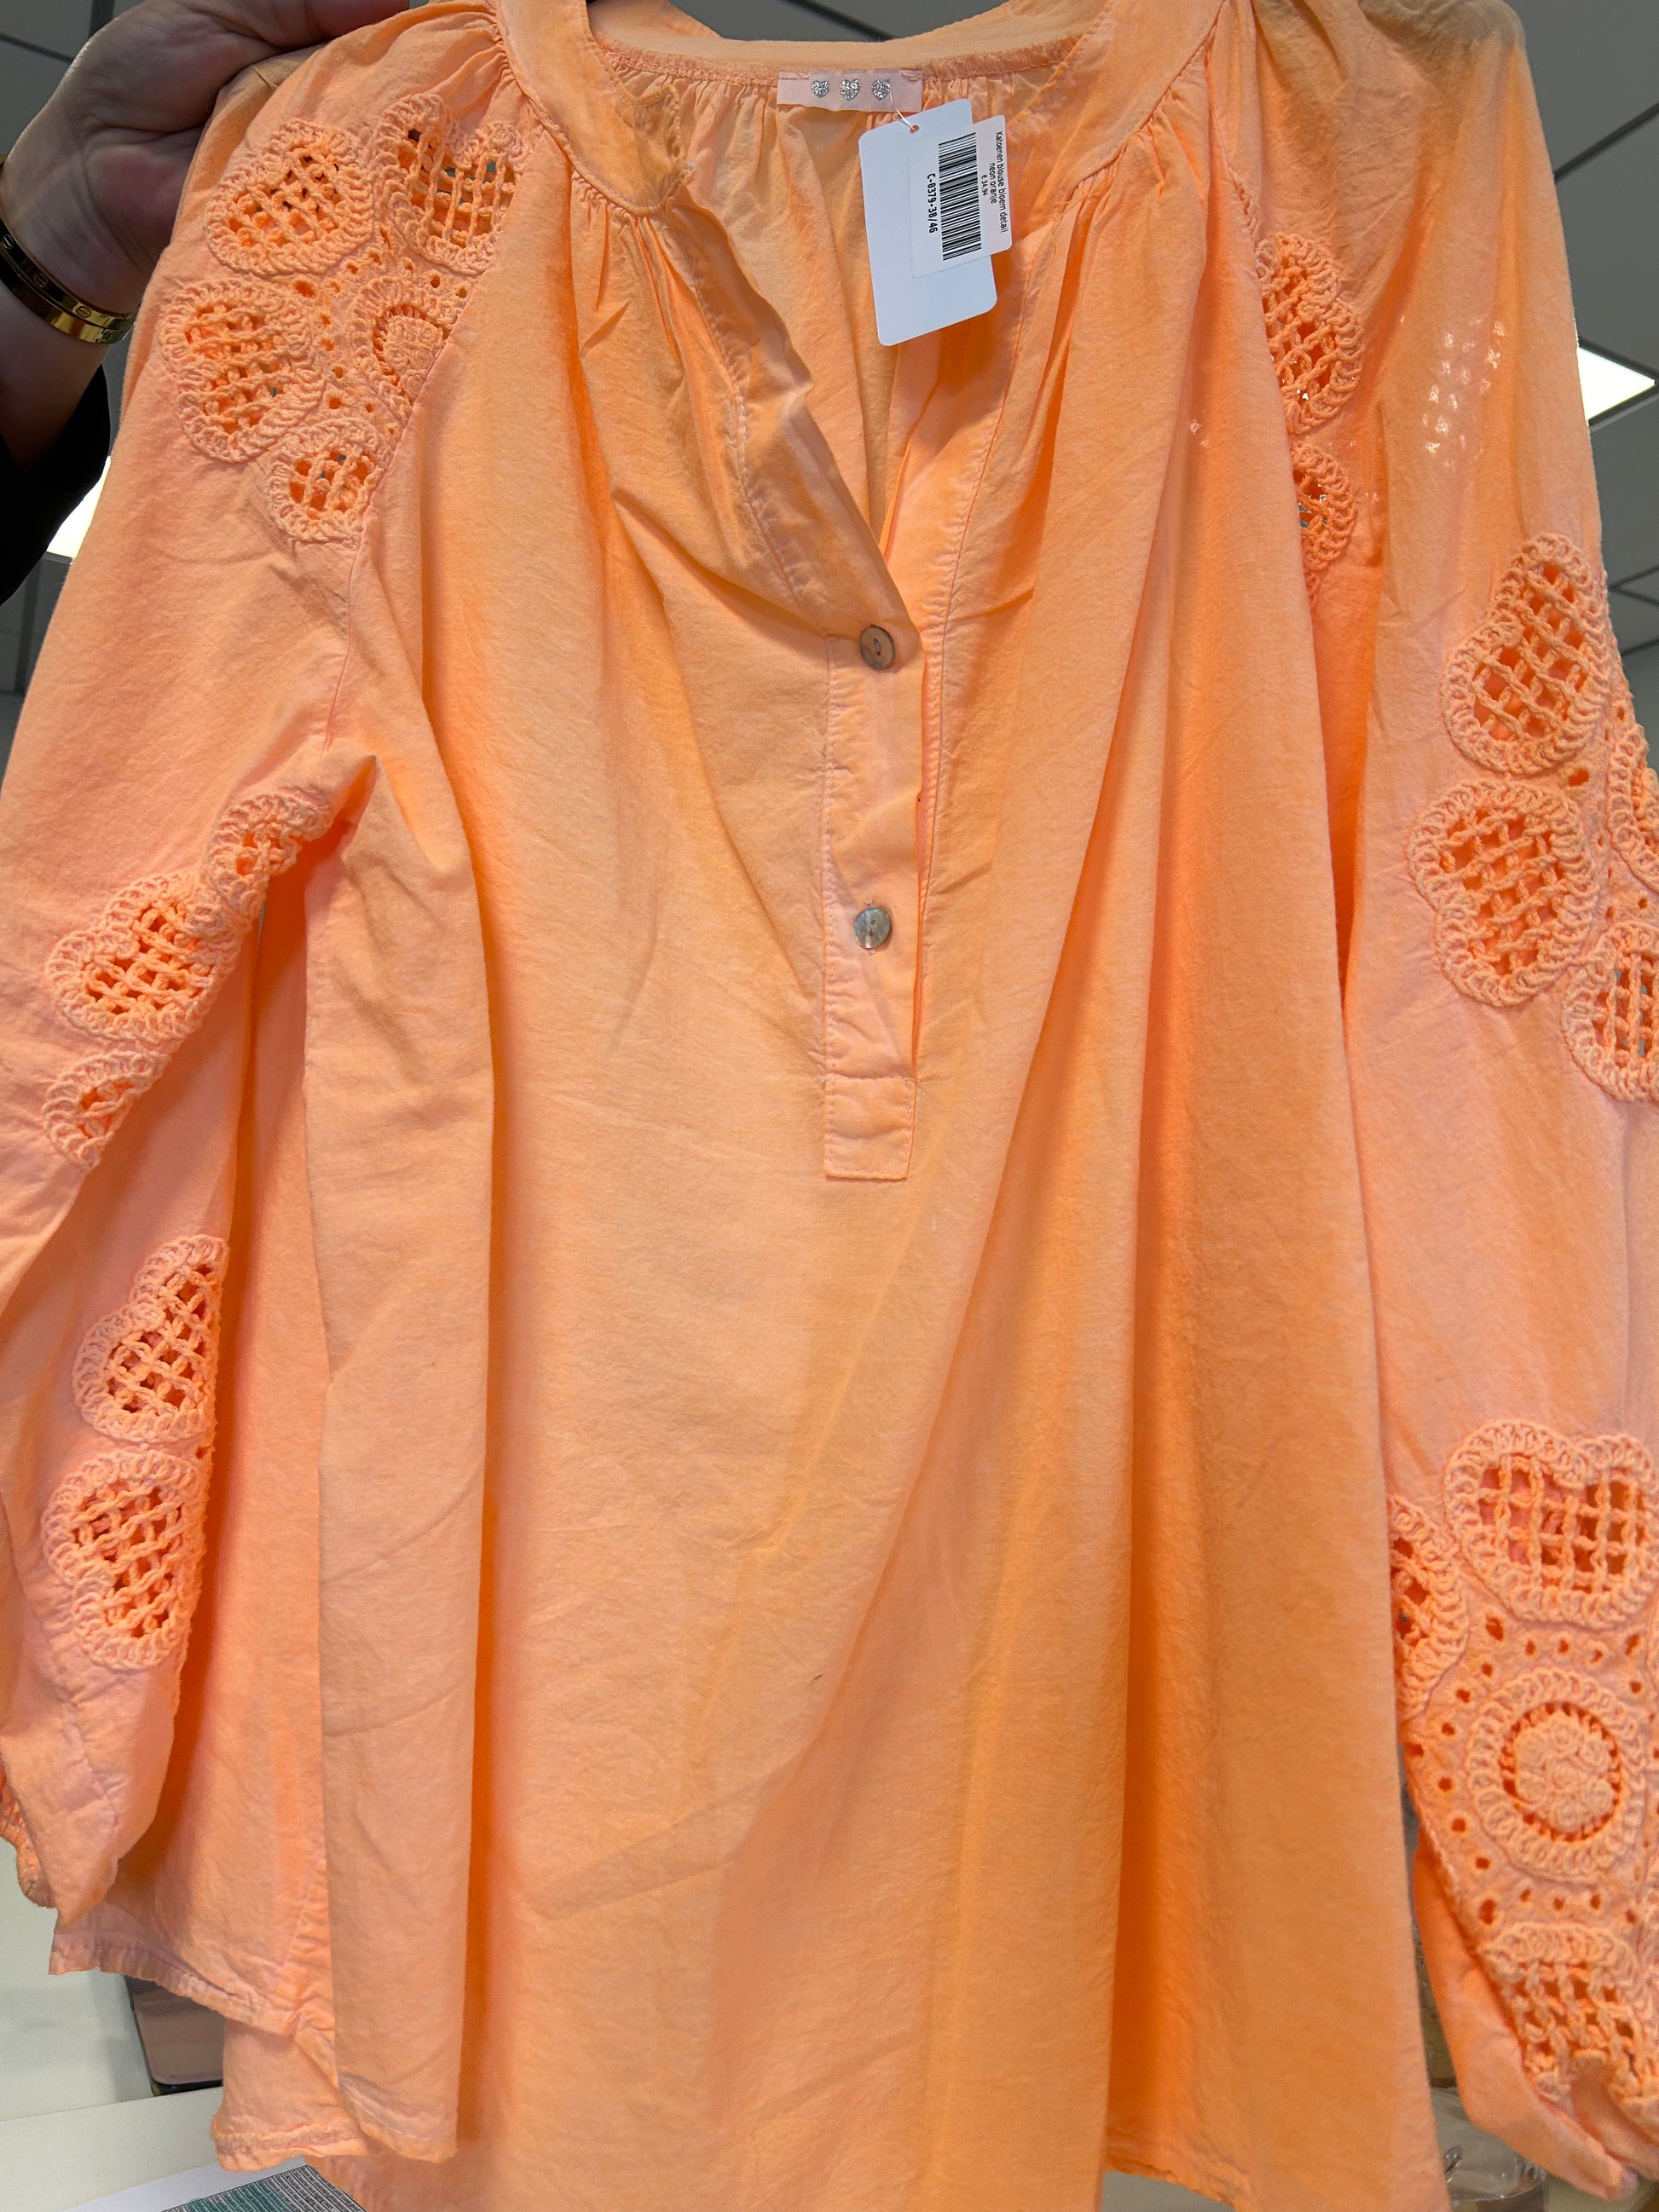 Katoenen blouse bloem detail neon oranje